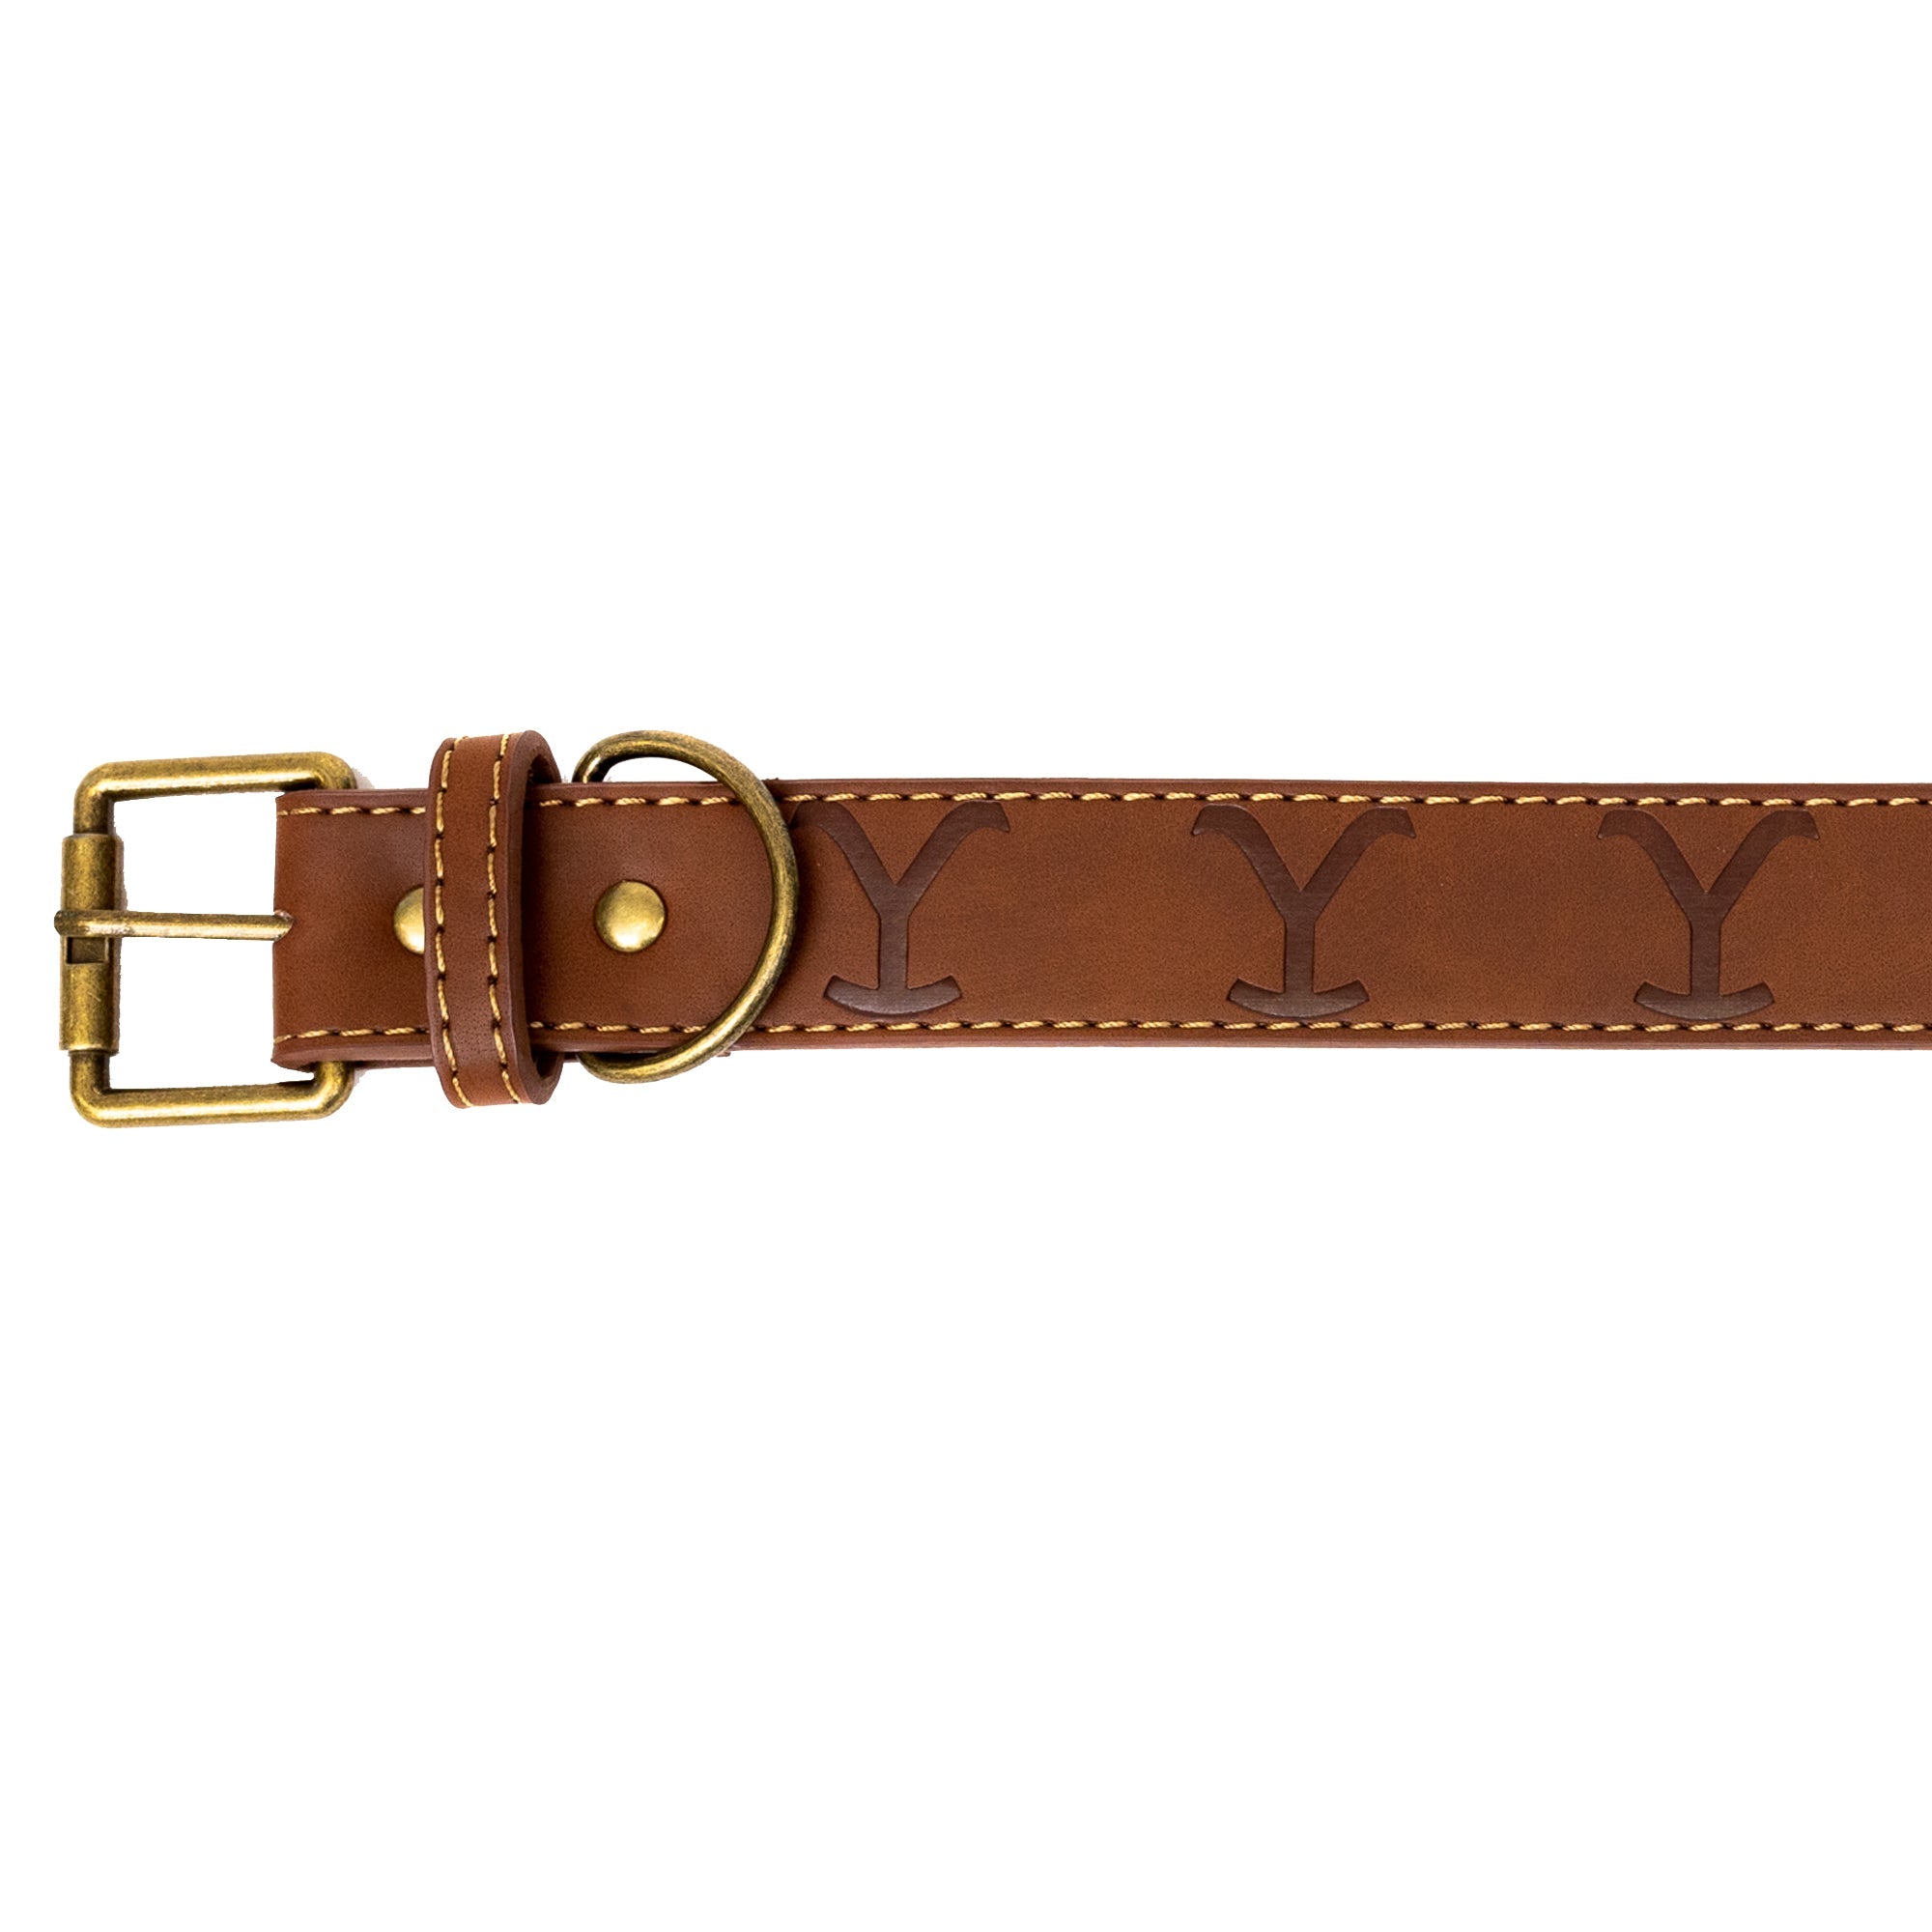 Vegan Leather Dog Collar - Yellowstone Dutton Ranch Logo Debossed Brown PU Leather